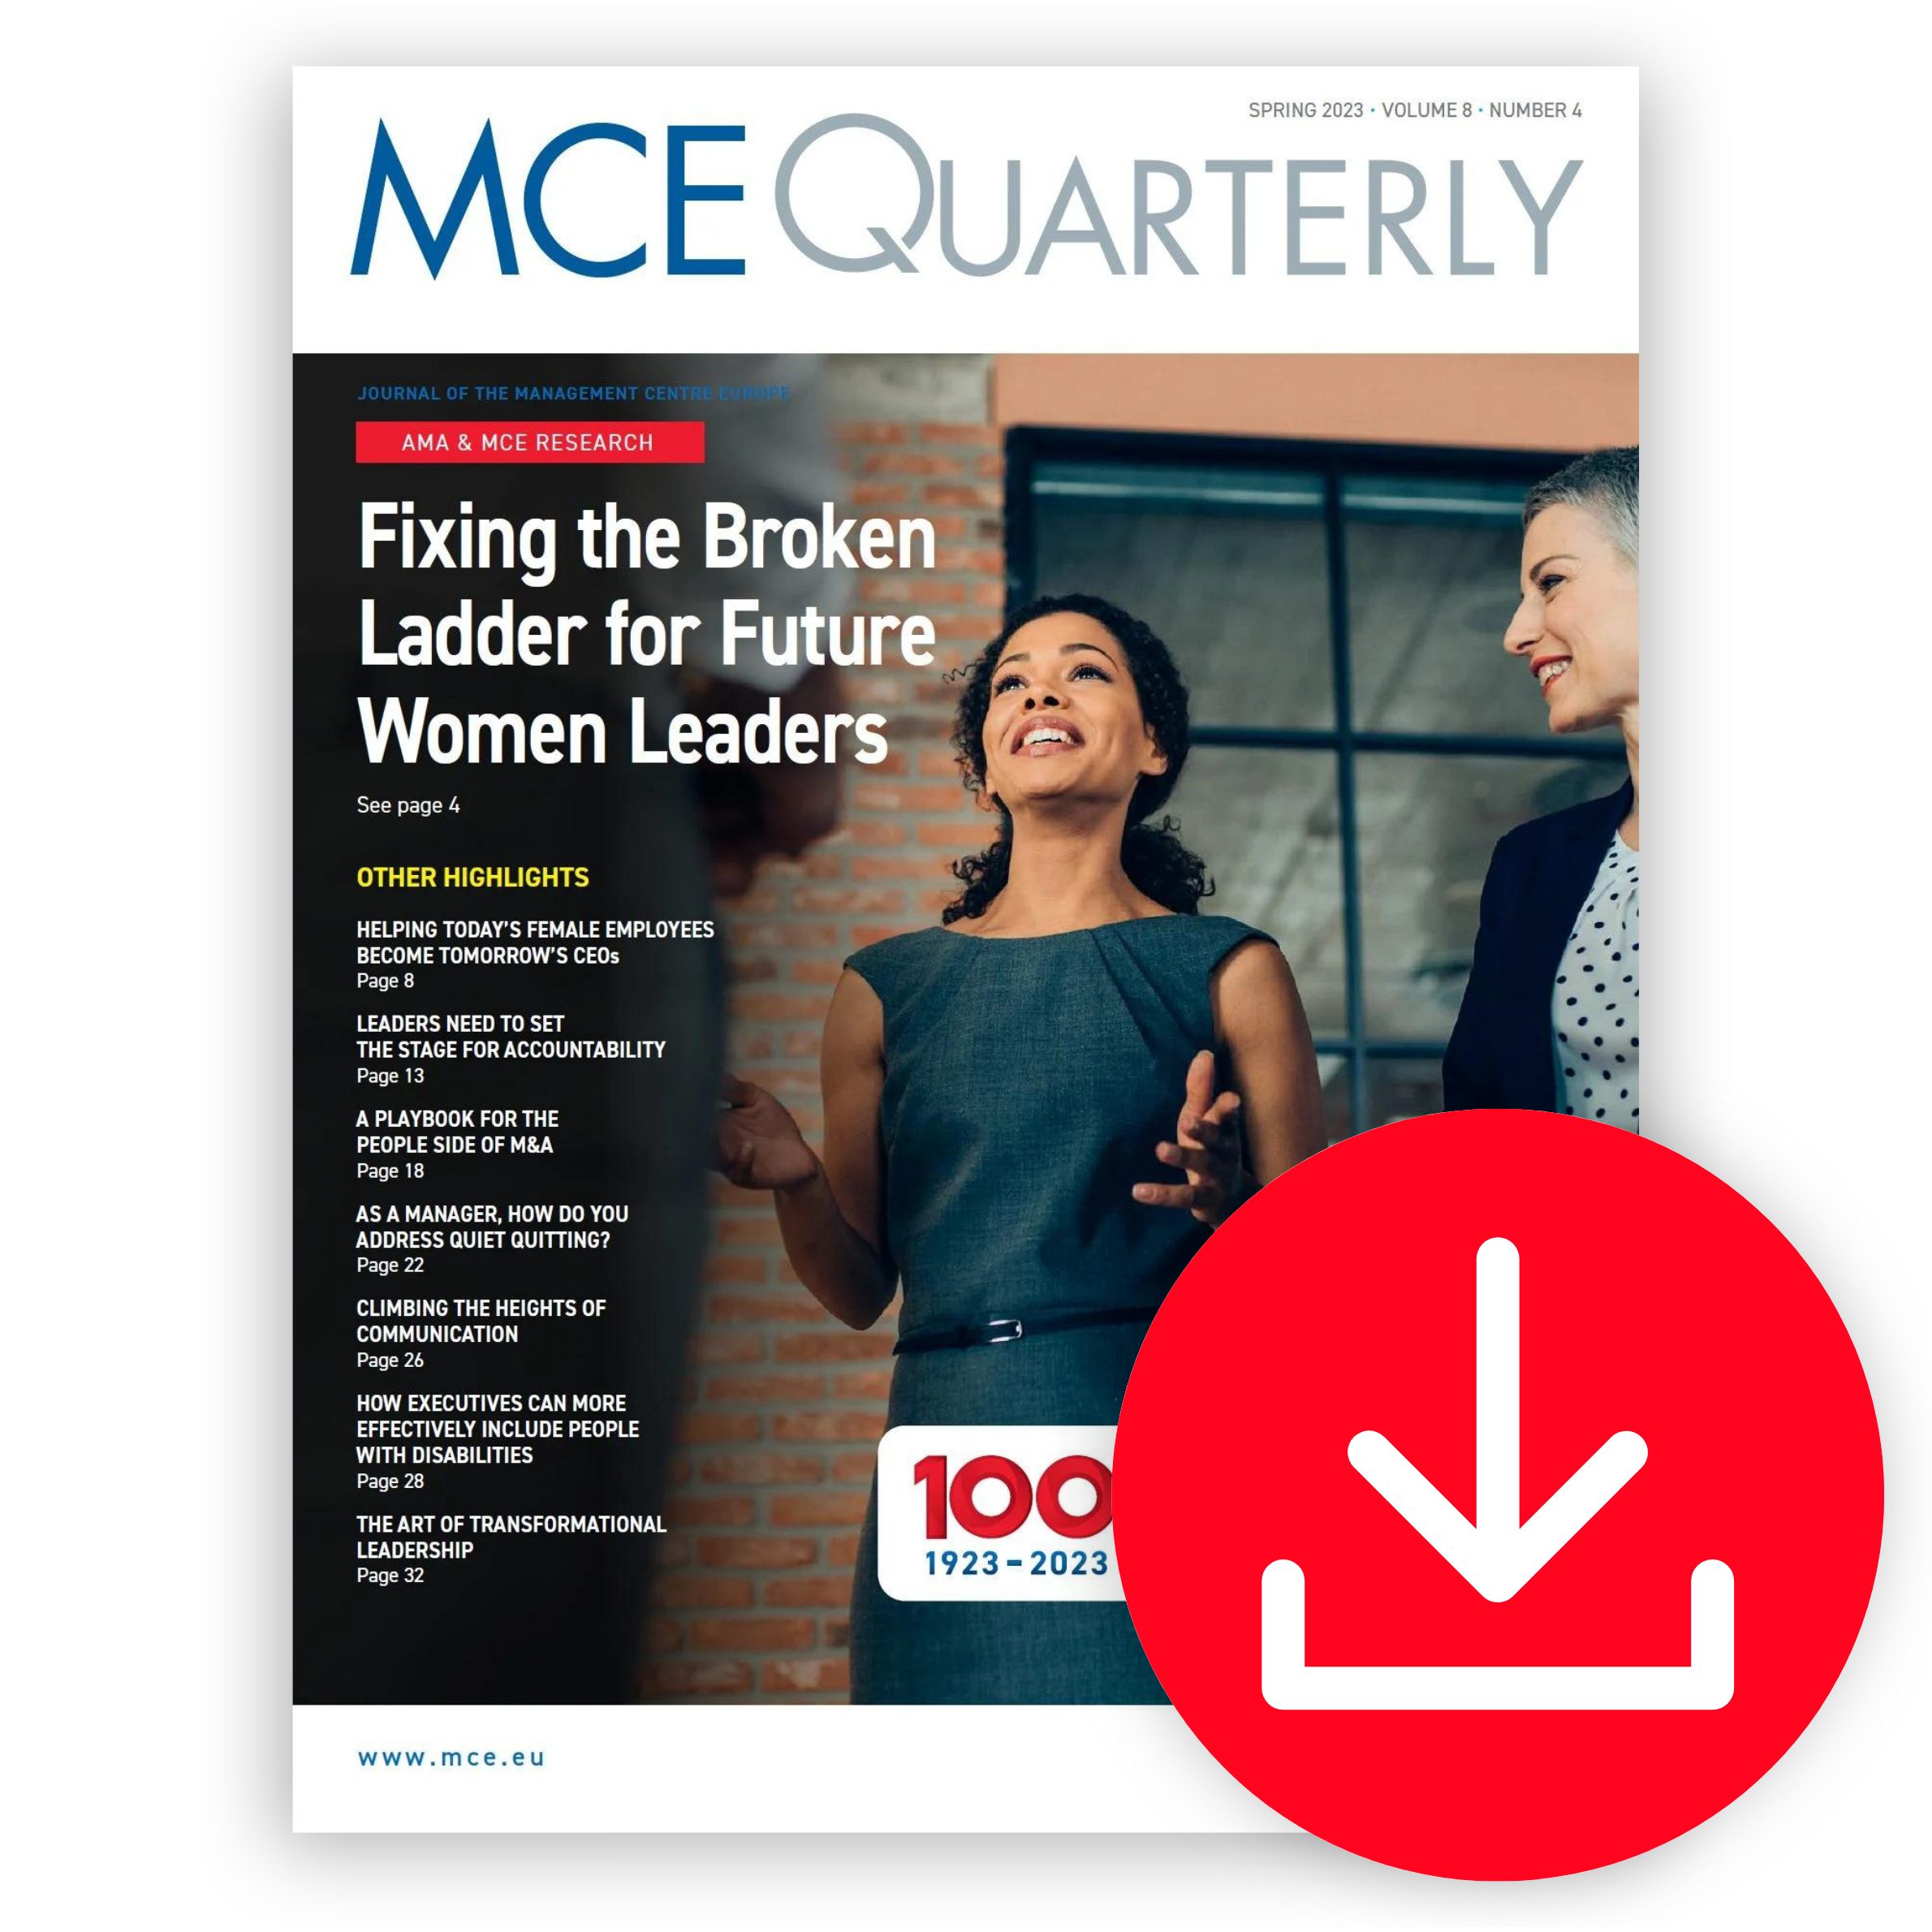 MCE Quarterly Spring 2023